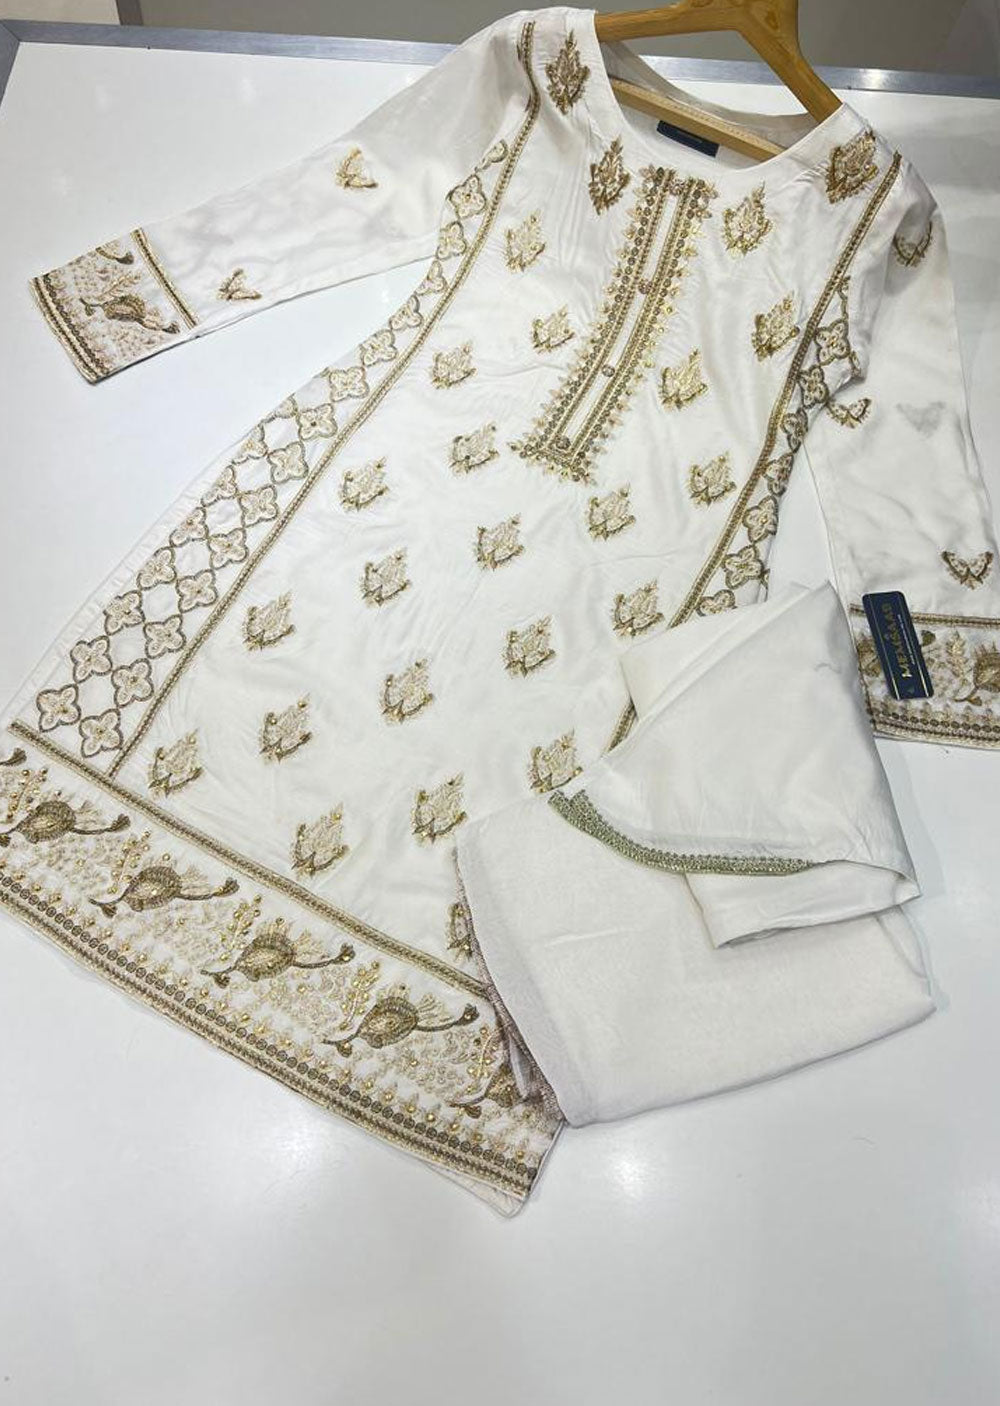 HK133 Raaz Readymade White Tulip Linen Suit - Memsaab Online